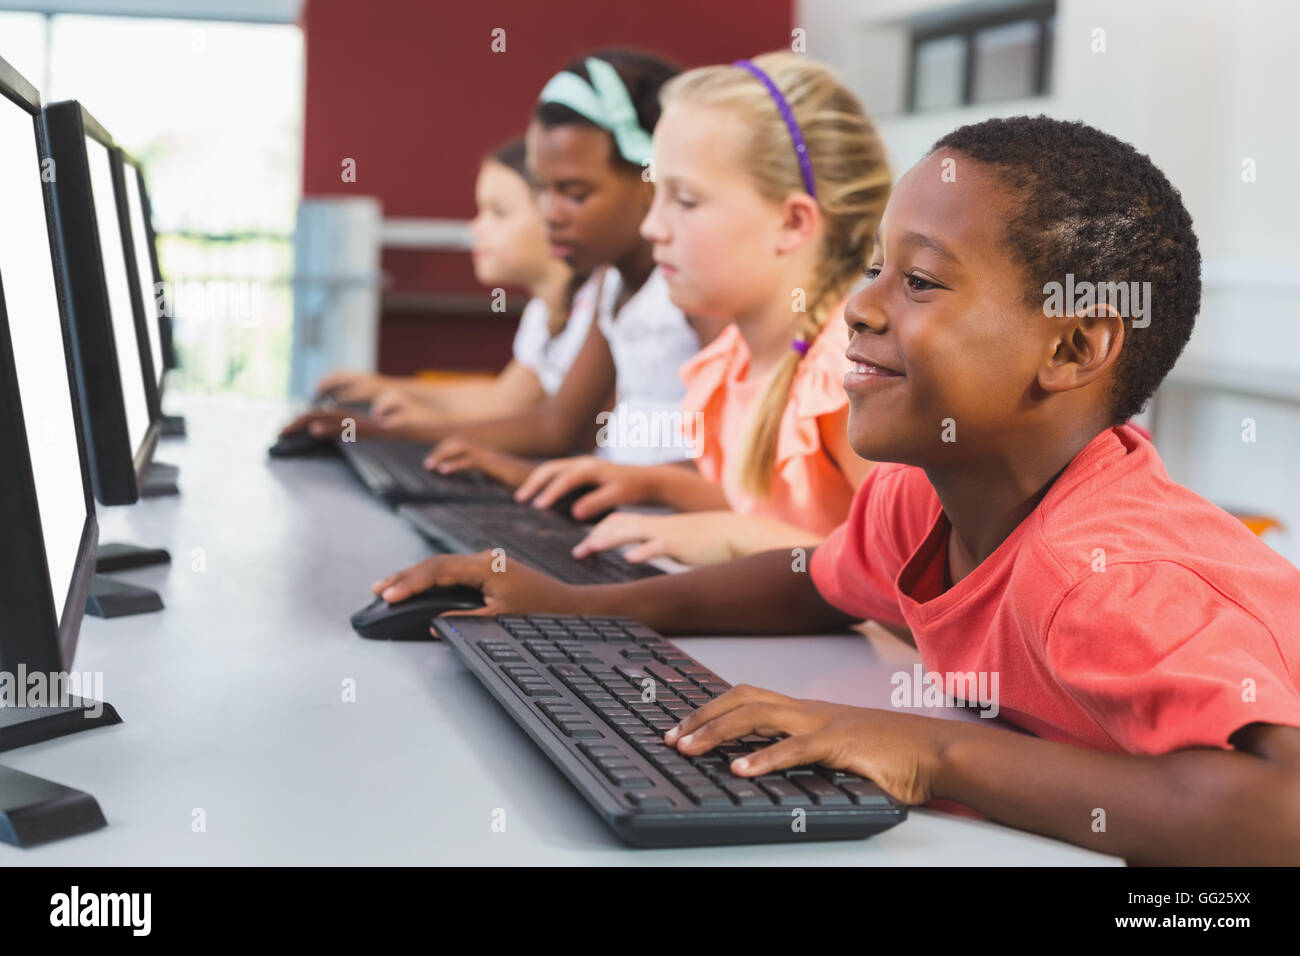 School Kids Using Computer In Classroom Stock Photo Alamy